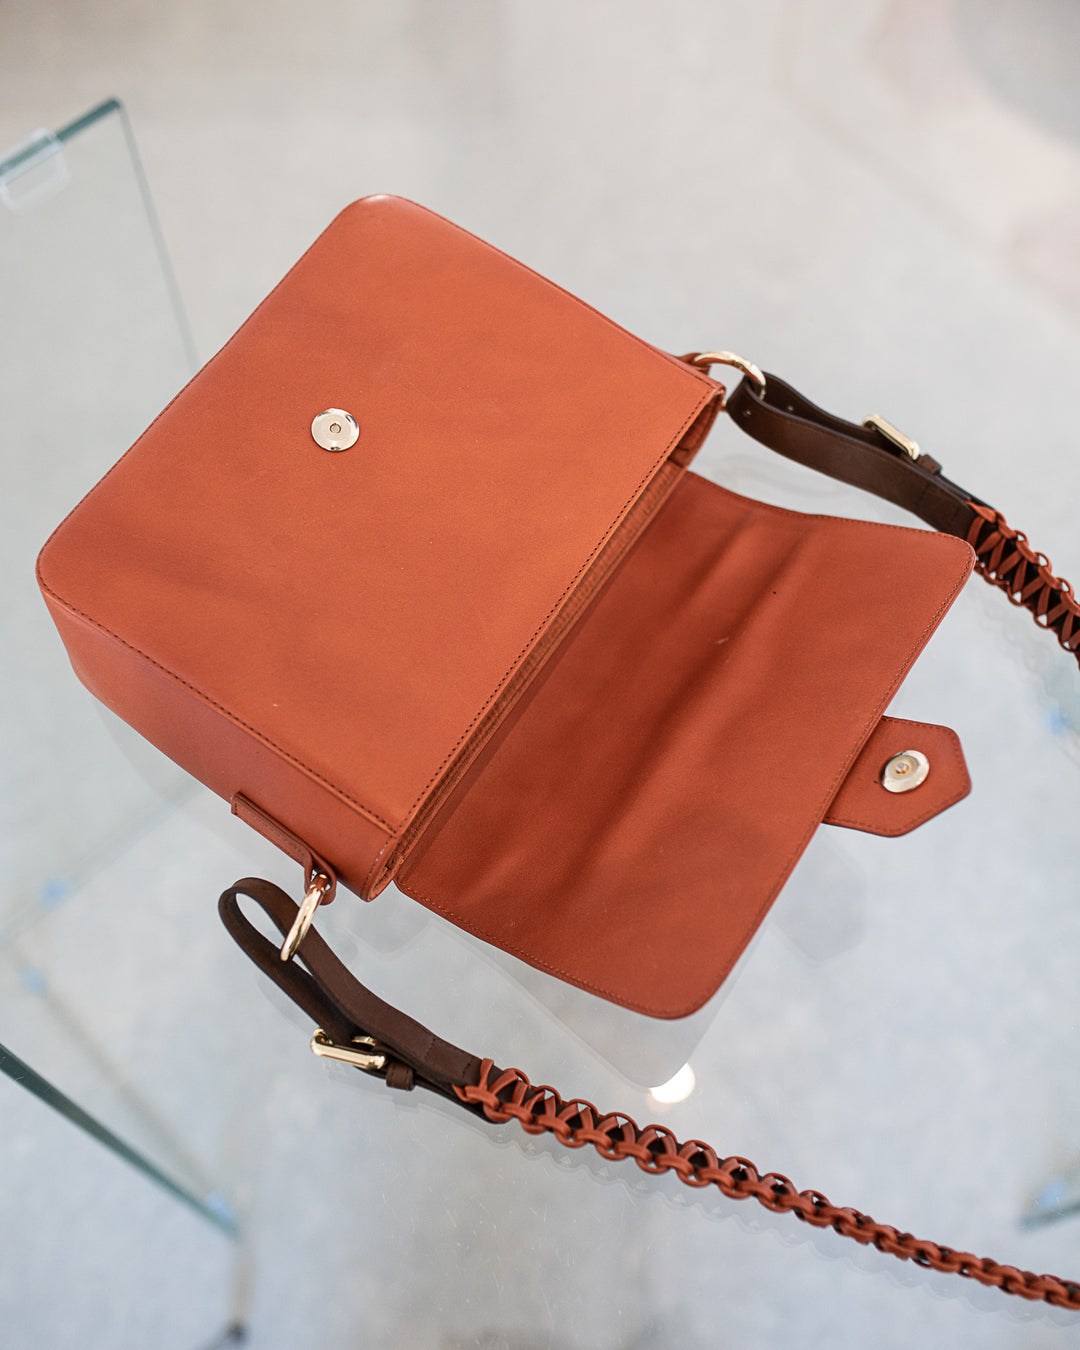 Blankens The Madeira bag leather orange/terracotta coloured bag